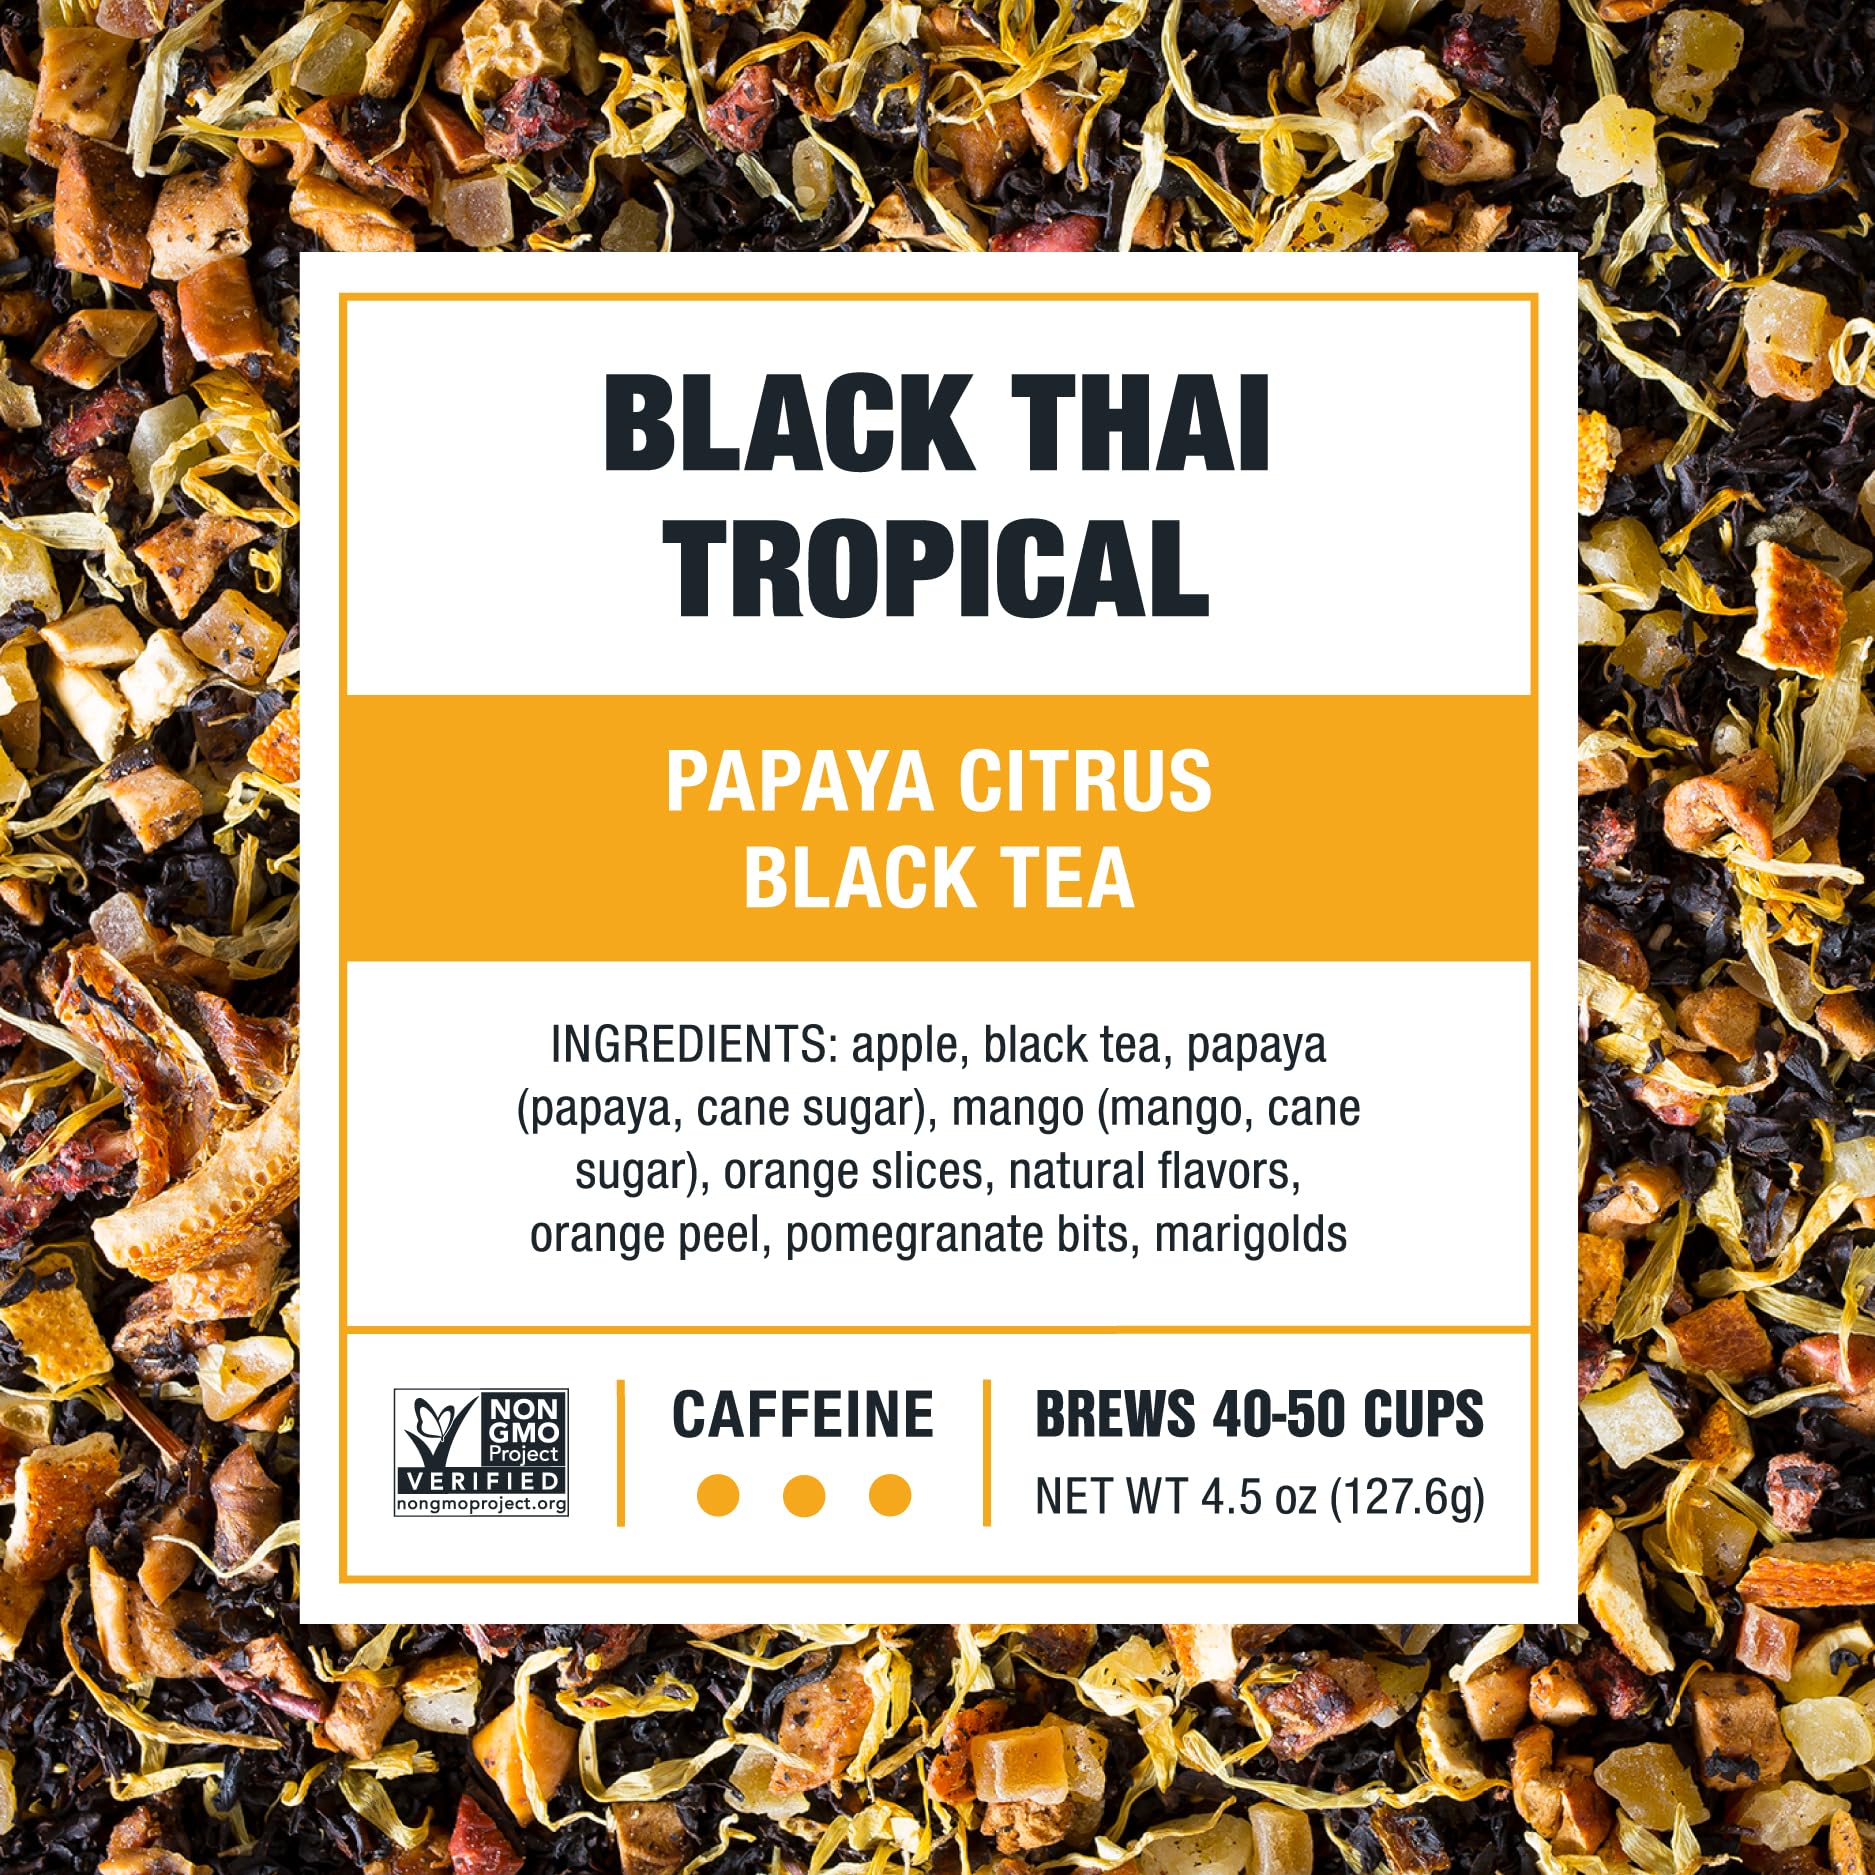 Tiesta Tea - Black Thai Tropical | Mango Citrus Black Tea | Premium Loose Leaf Tea Blends | High Caffeinated Black Tea | Make Hot or Iced Tea & Brews up to 50 Cups - 4.5oz Refillable Tin